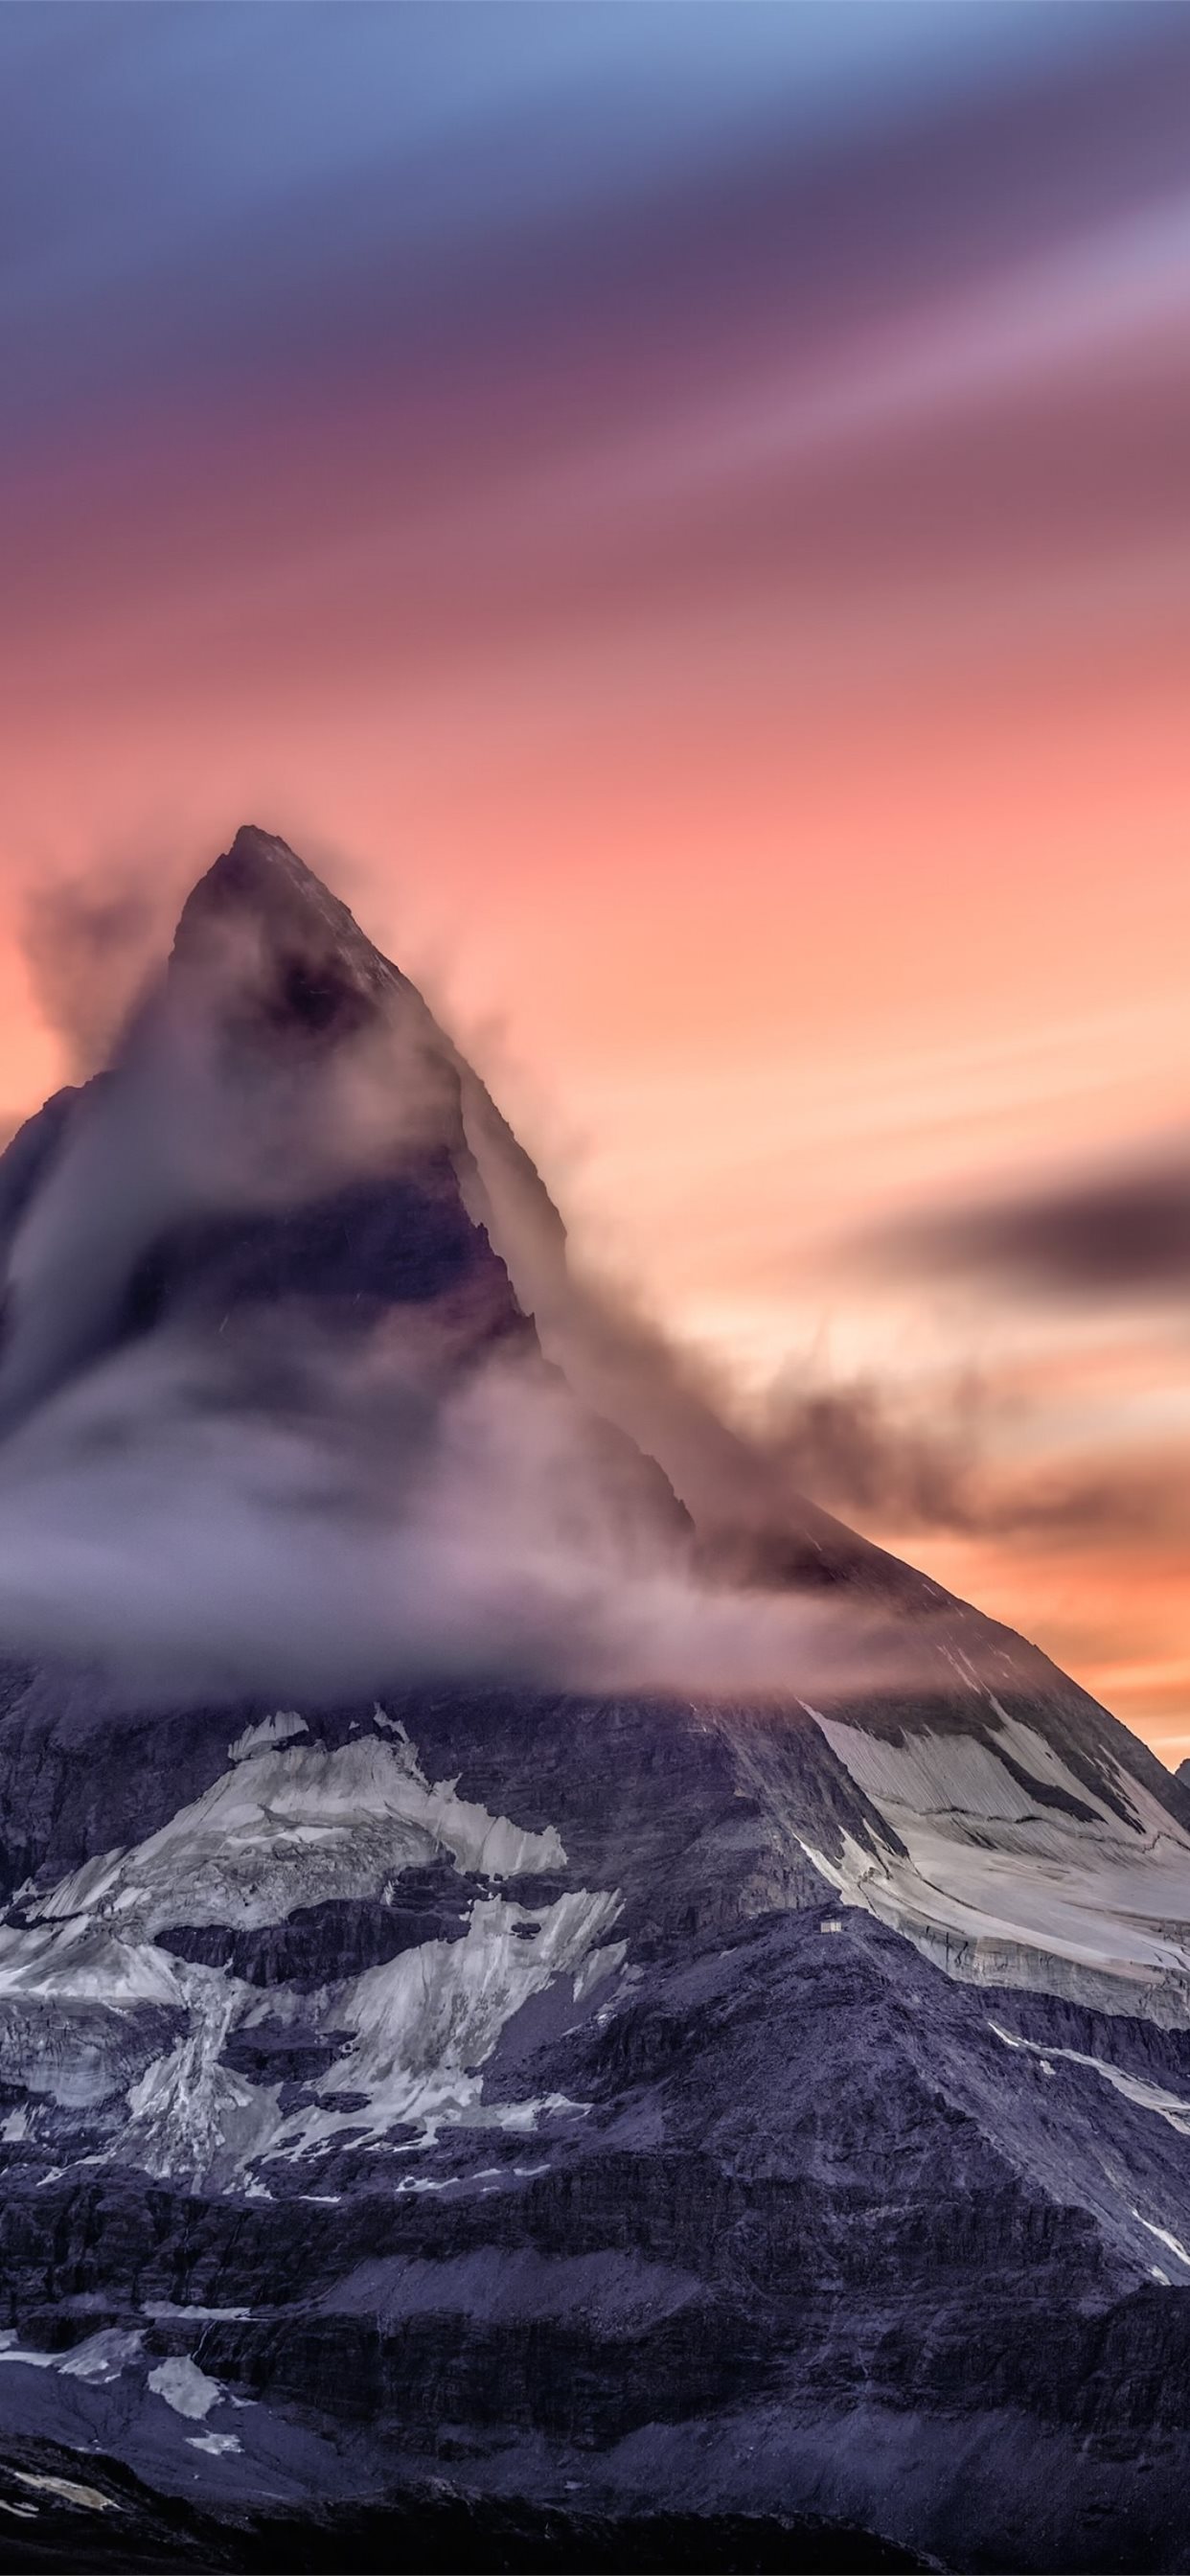 Switzerland Matterhorn Mountain Clouds iPhone X Wallpapers Free Download